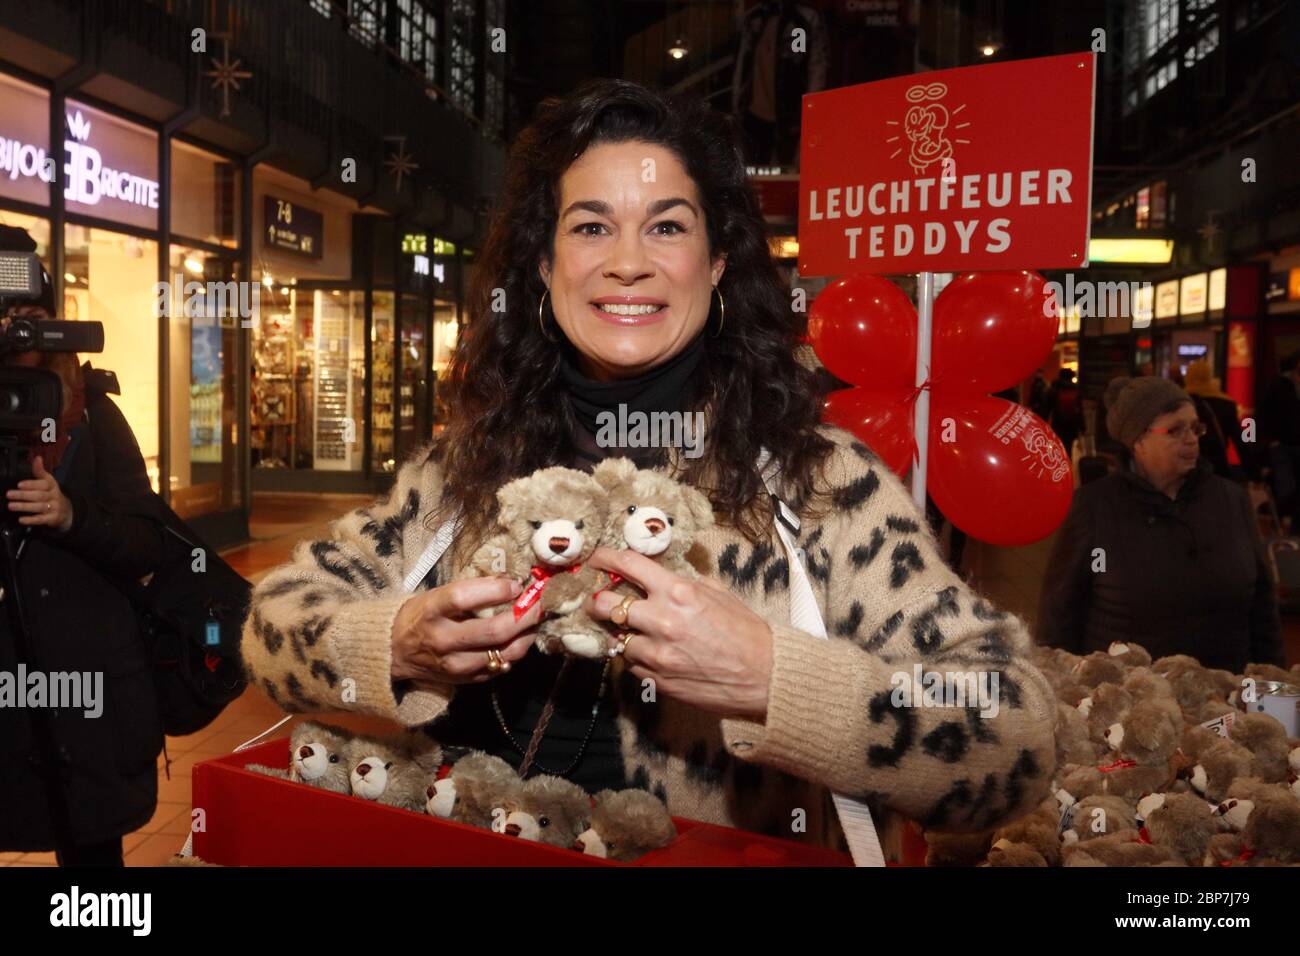 Caroline Kiesewetter,Beacon Teddy Action 2019,Press Launch,Wandelhalle Hamburg hautbahnhof,21.11.2019 Stock Photo